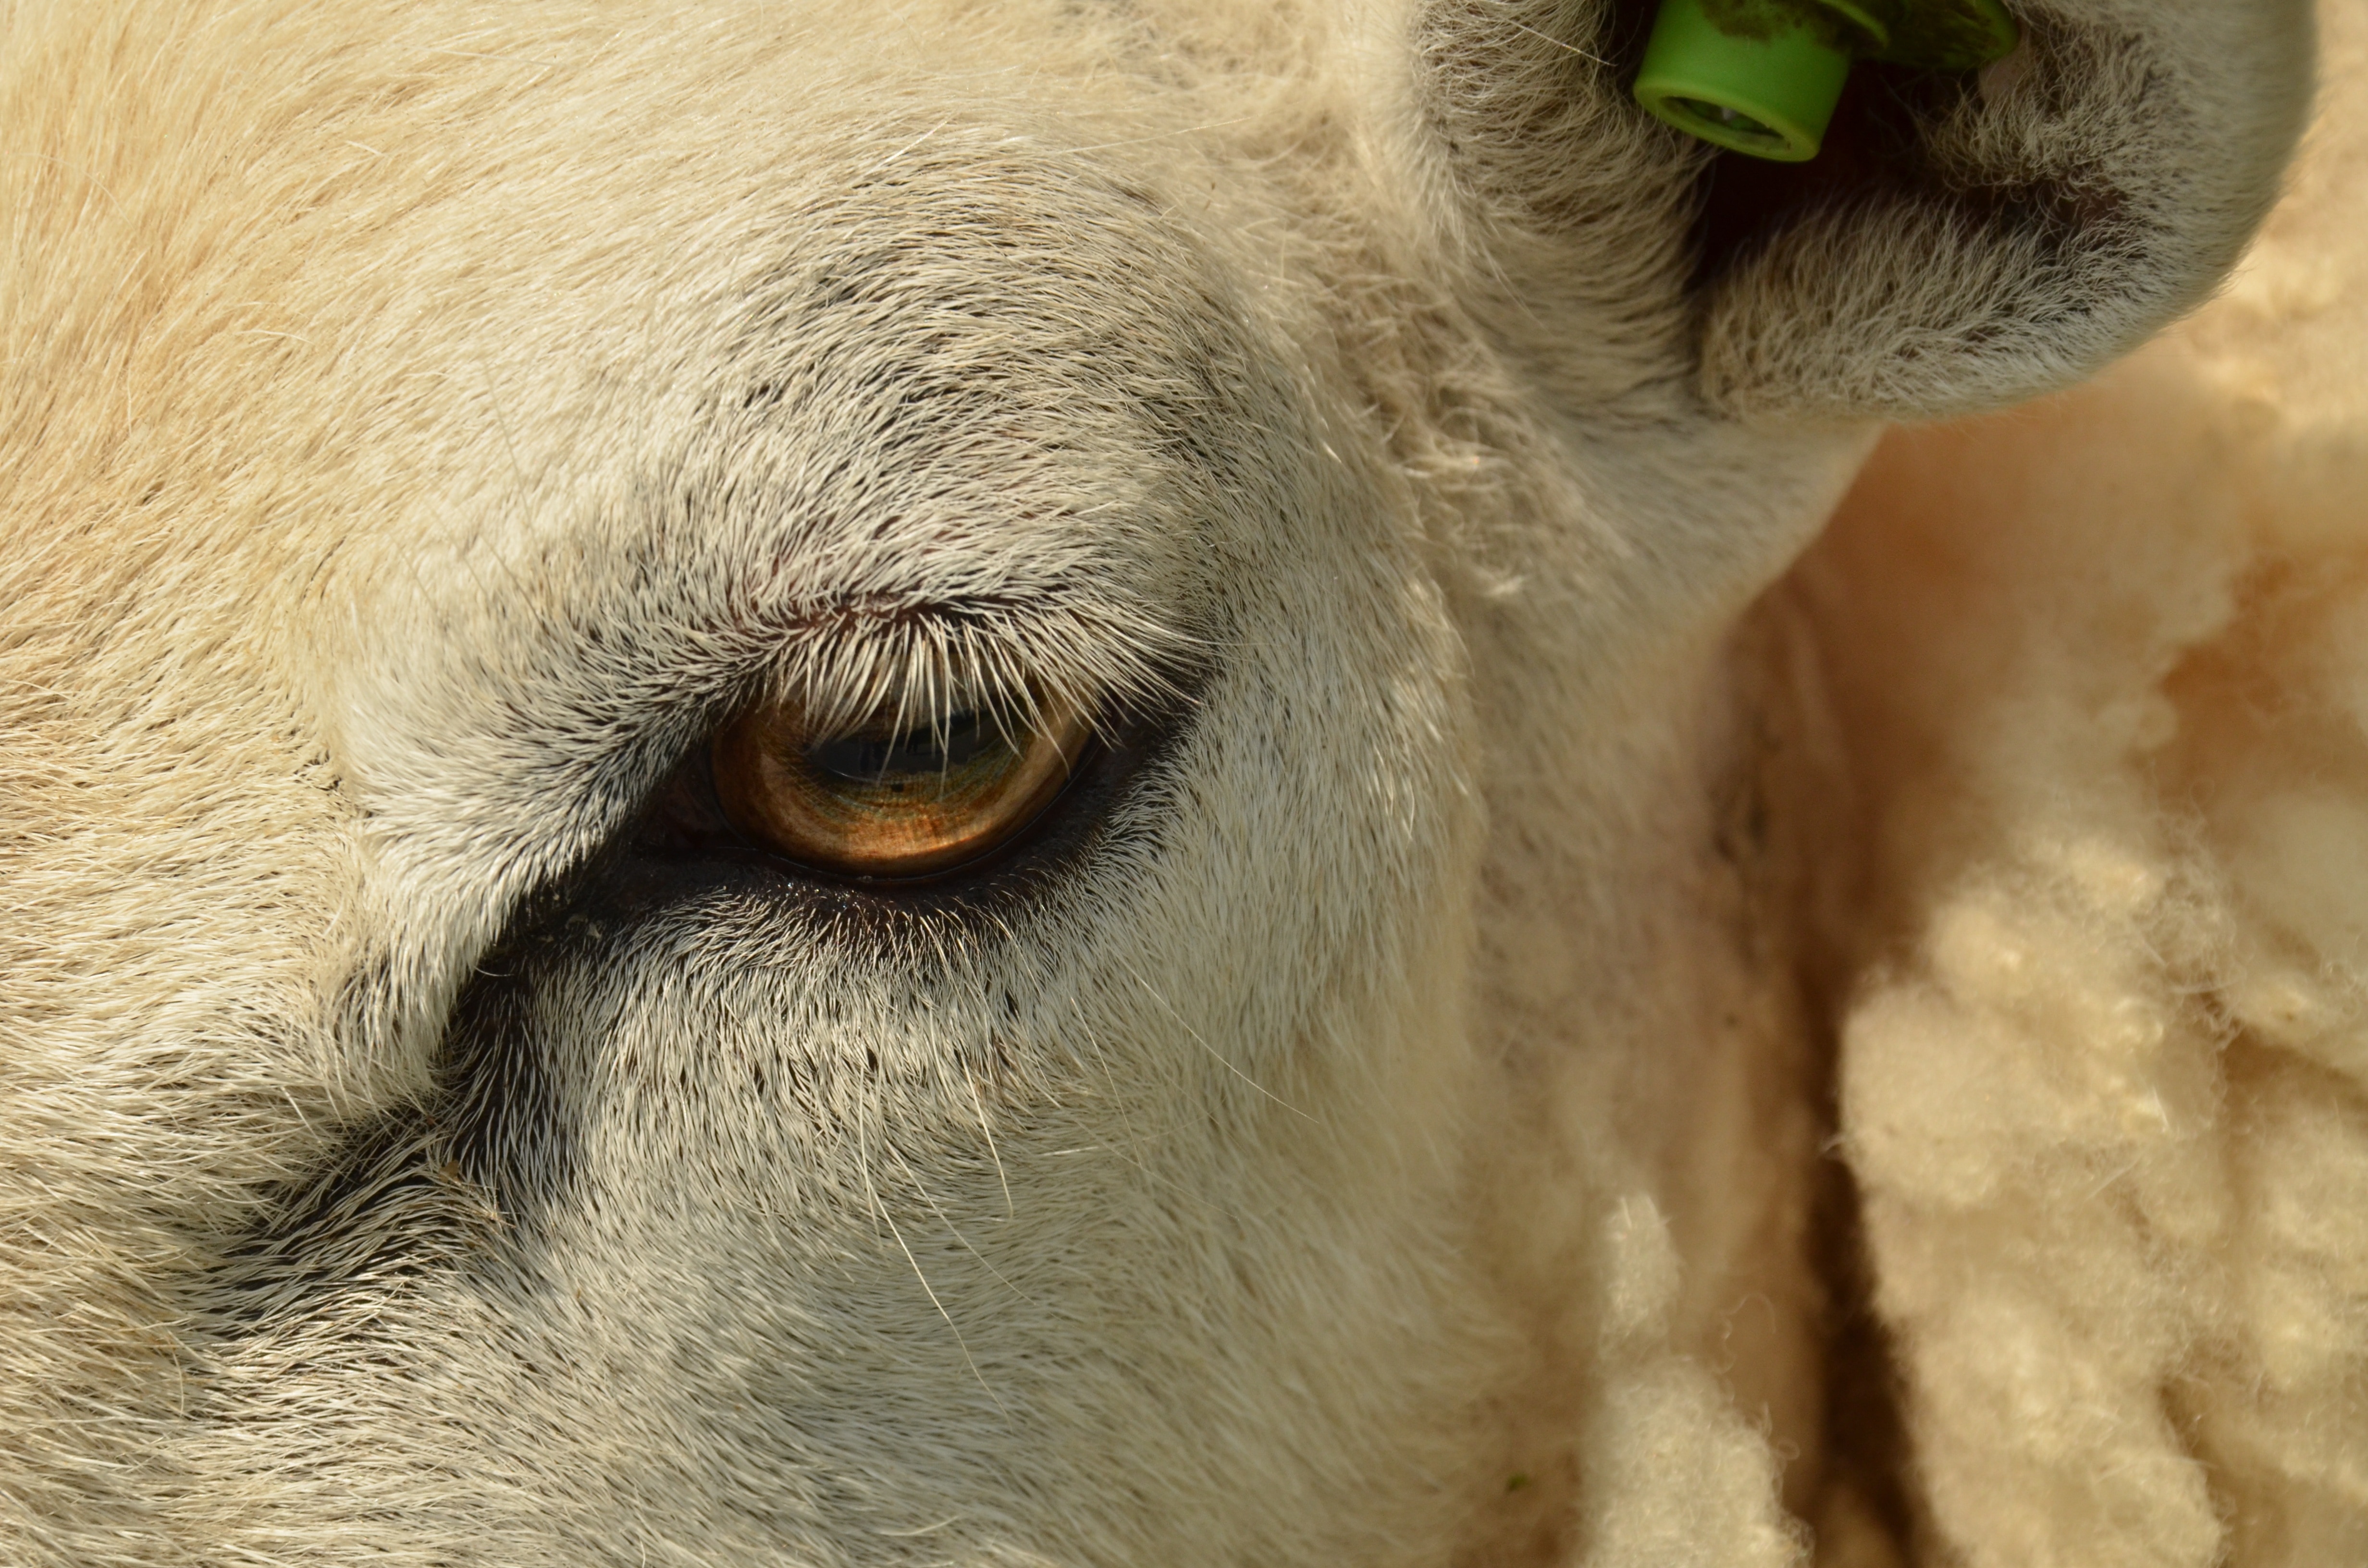 Eyelash, Mammal, Sheep, Animal, Eye, one animal, domestic animals